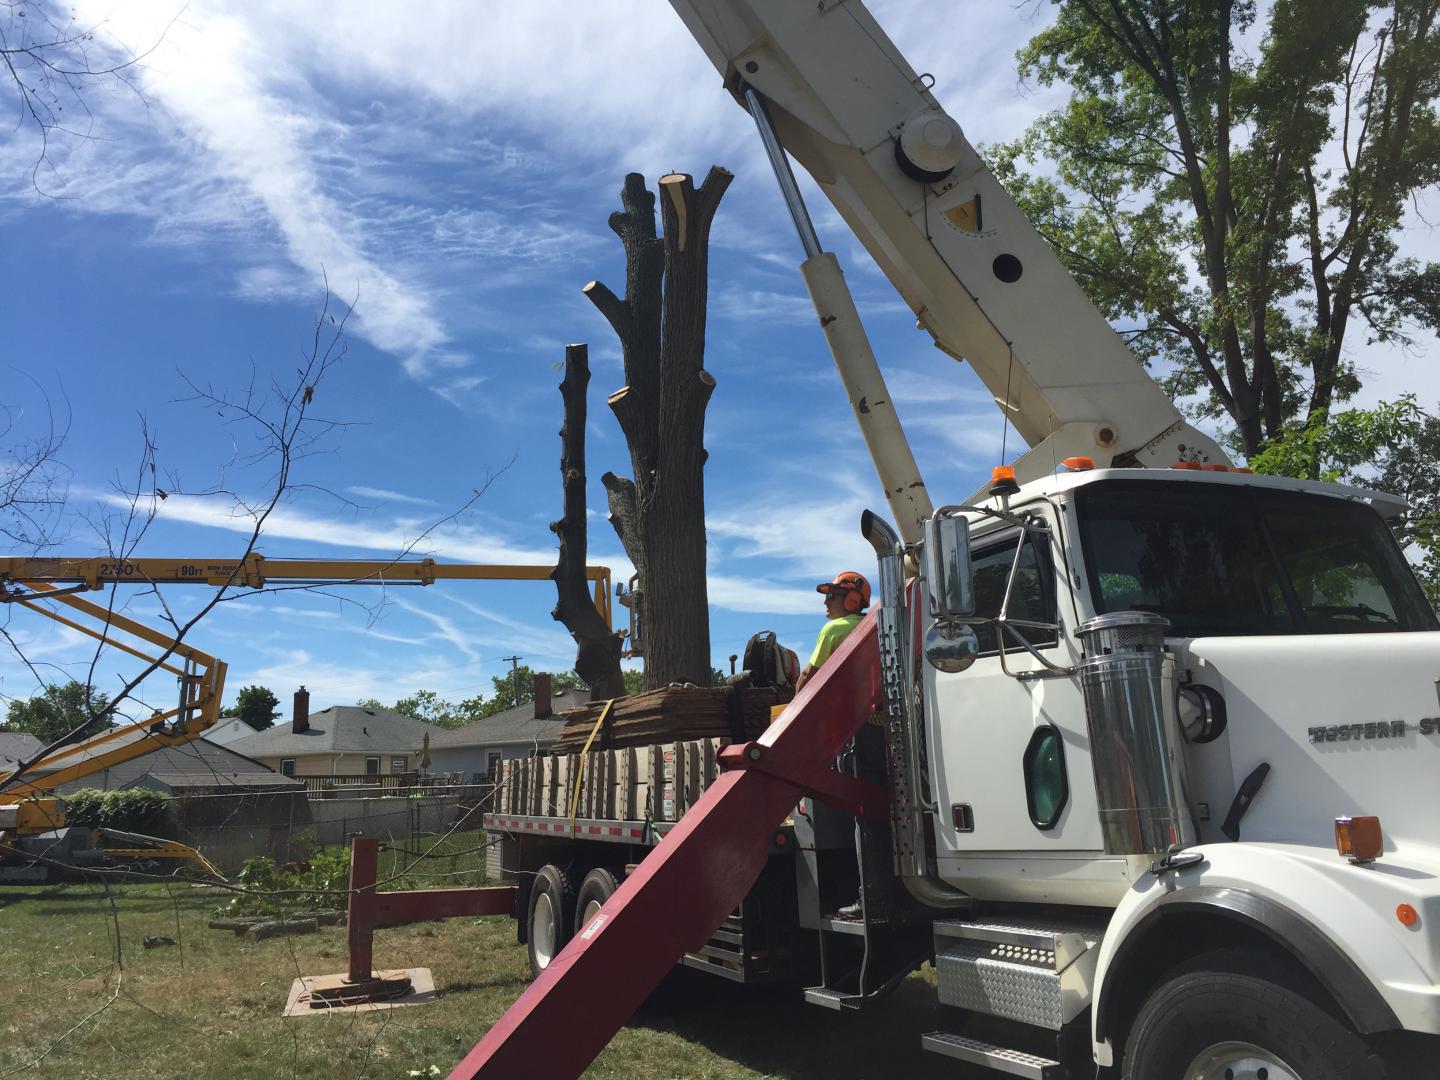 Tree removal company vehicle